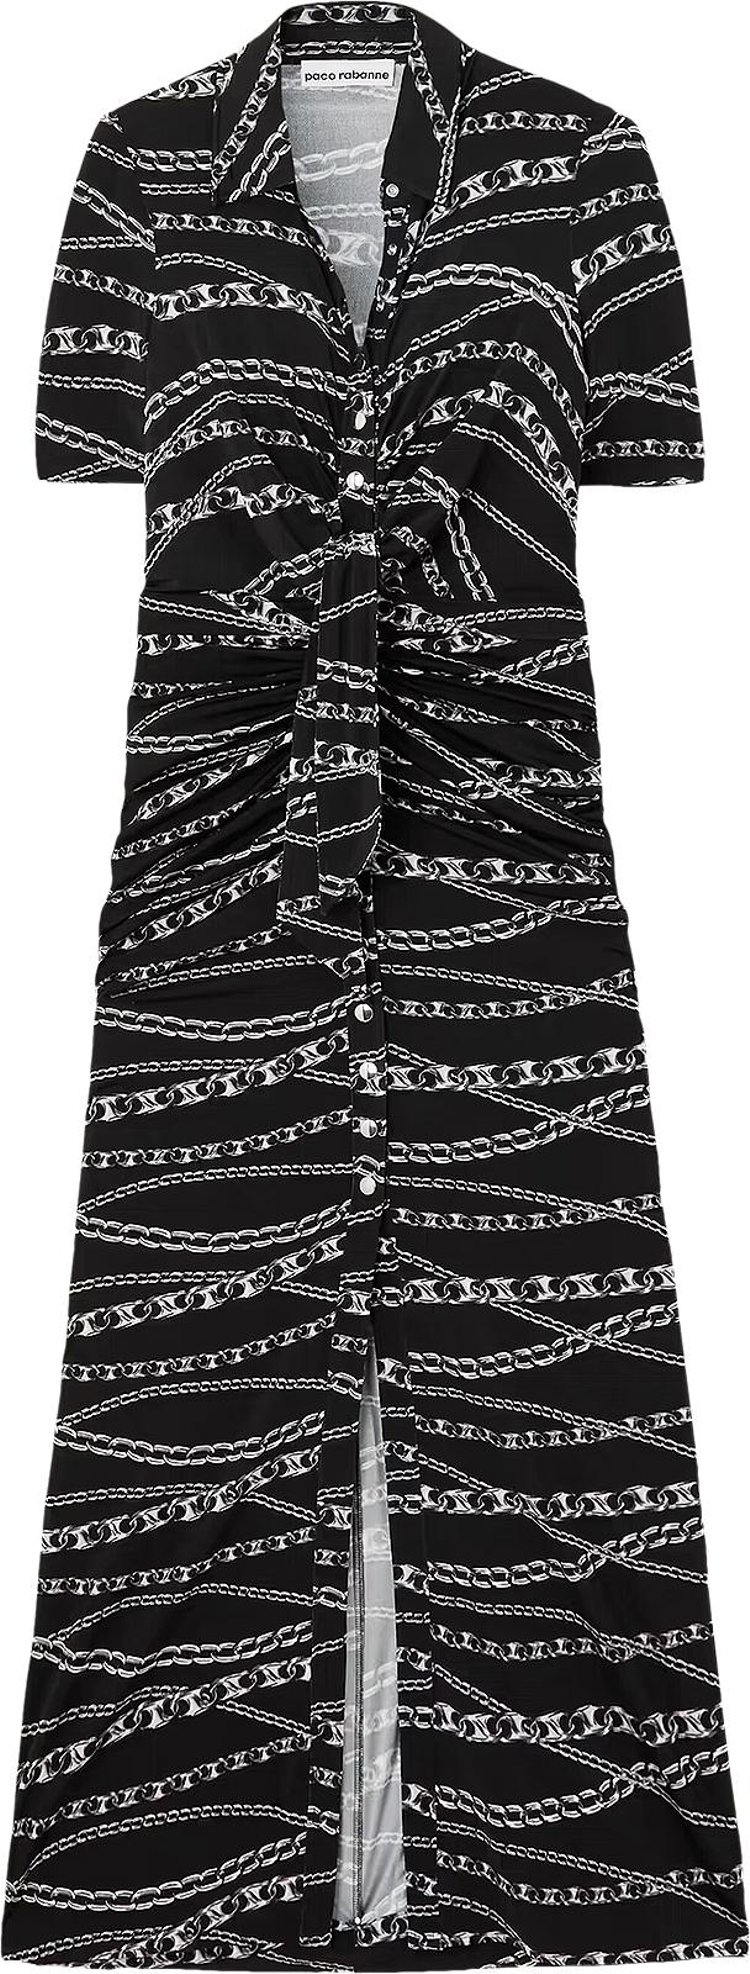 Paco Rabanne Crystal Chain Link Dress in Metallic